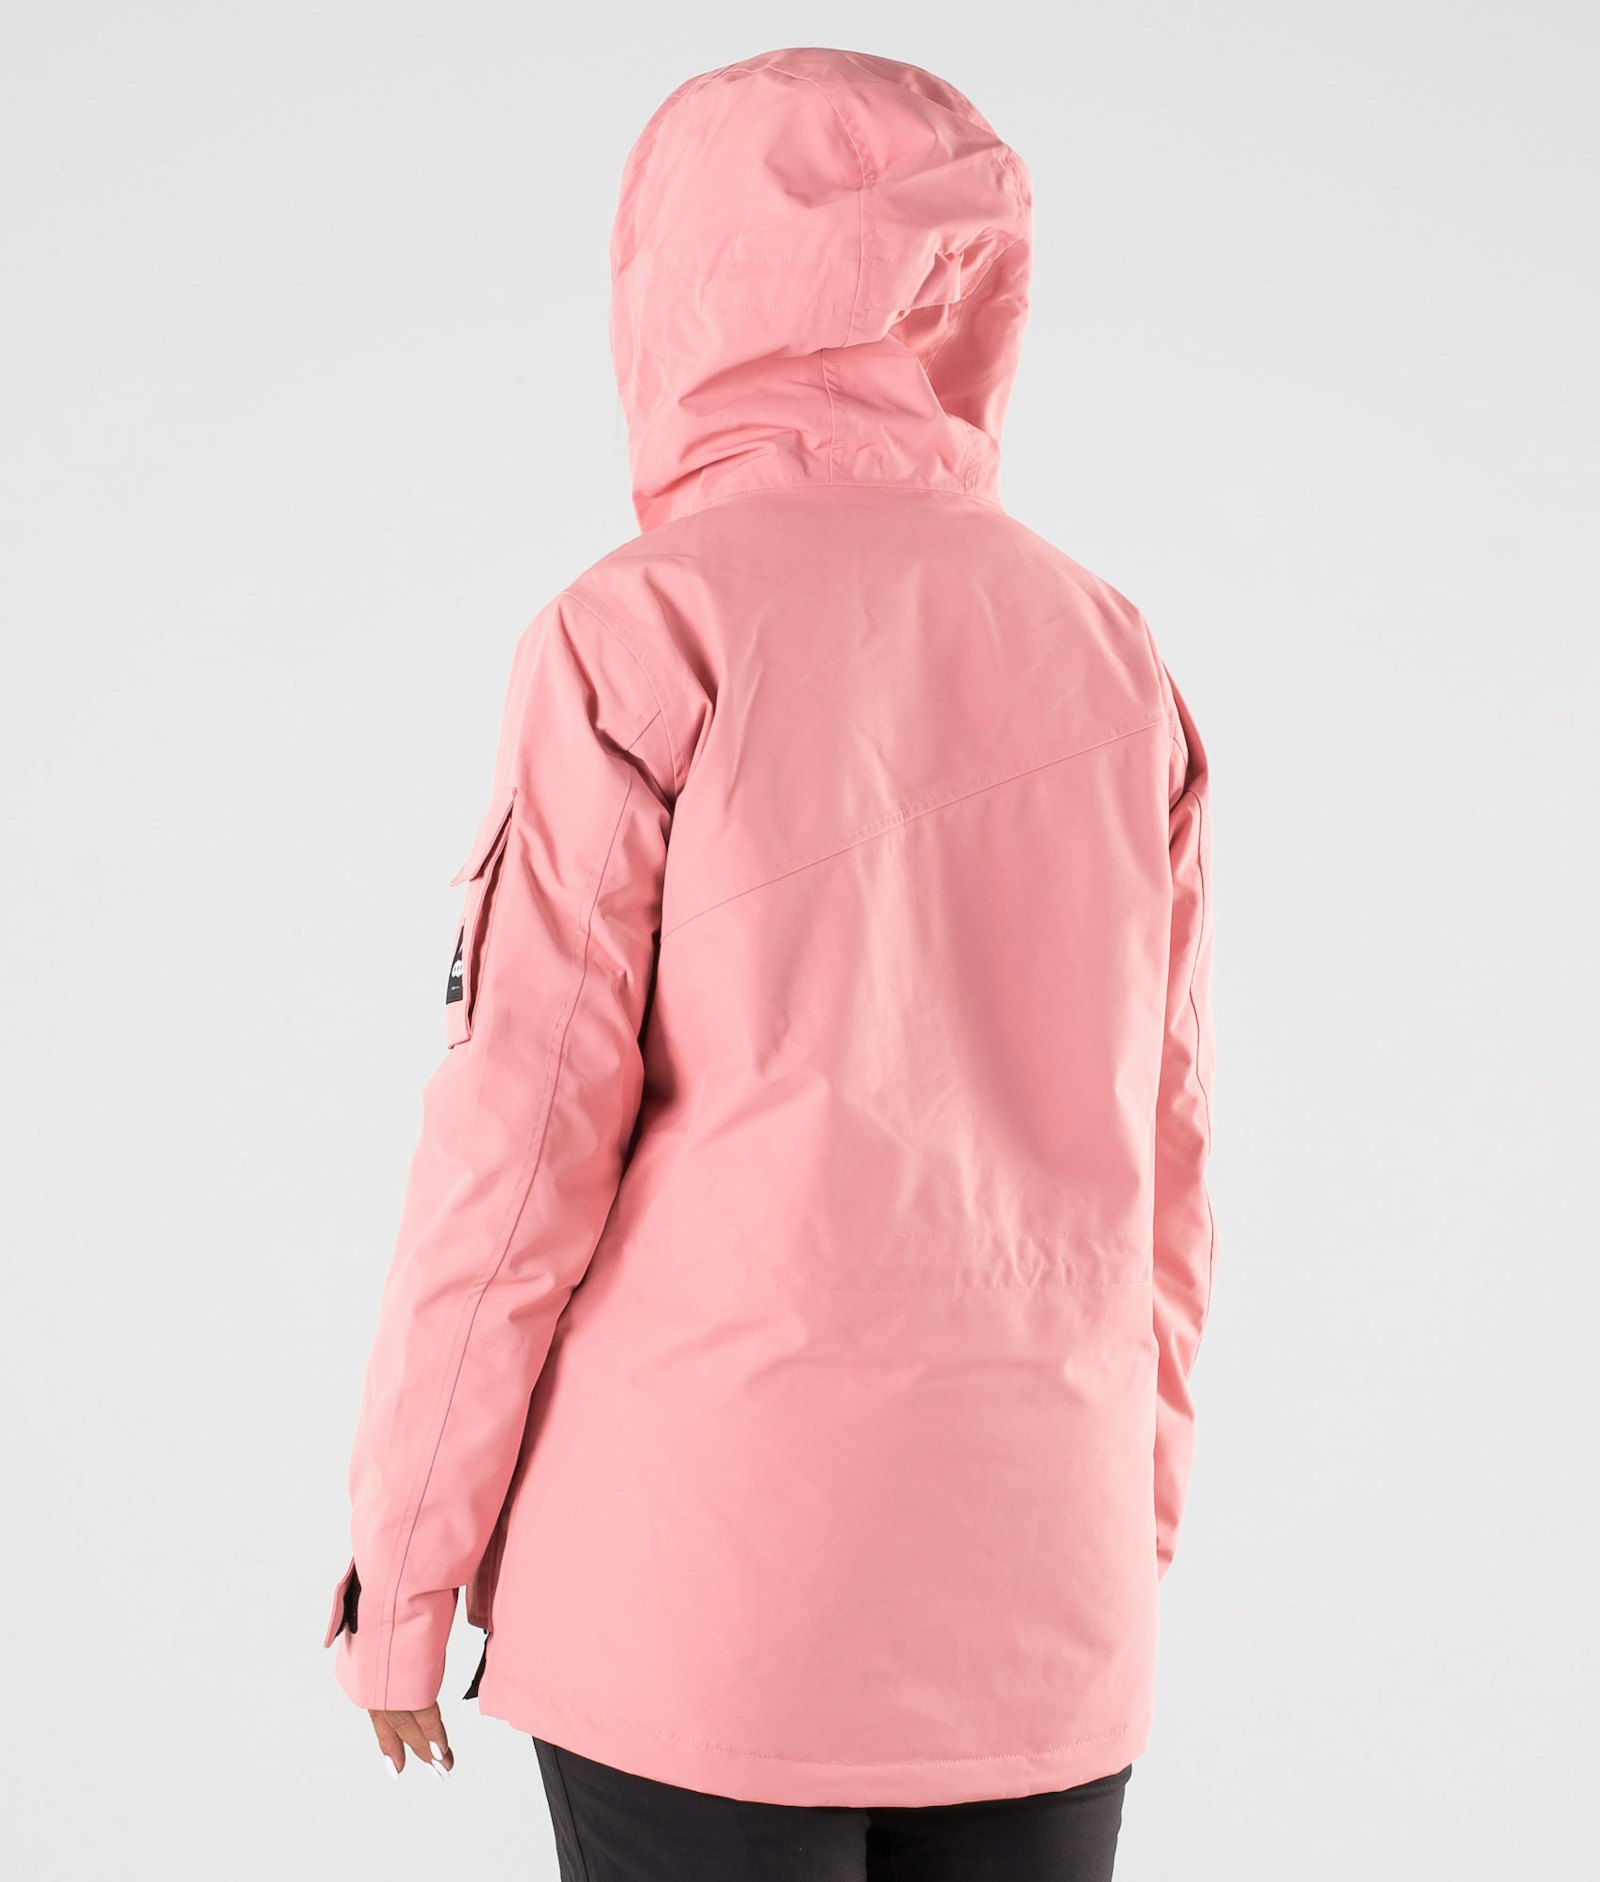 Adept W 2019 Snowboard Jacket Women Pink